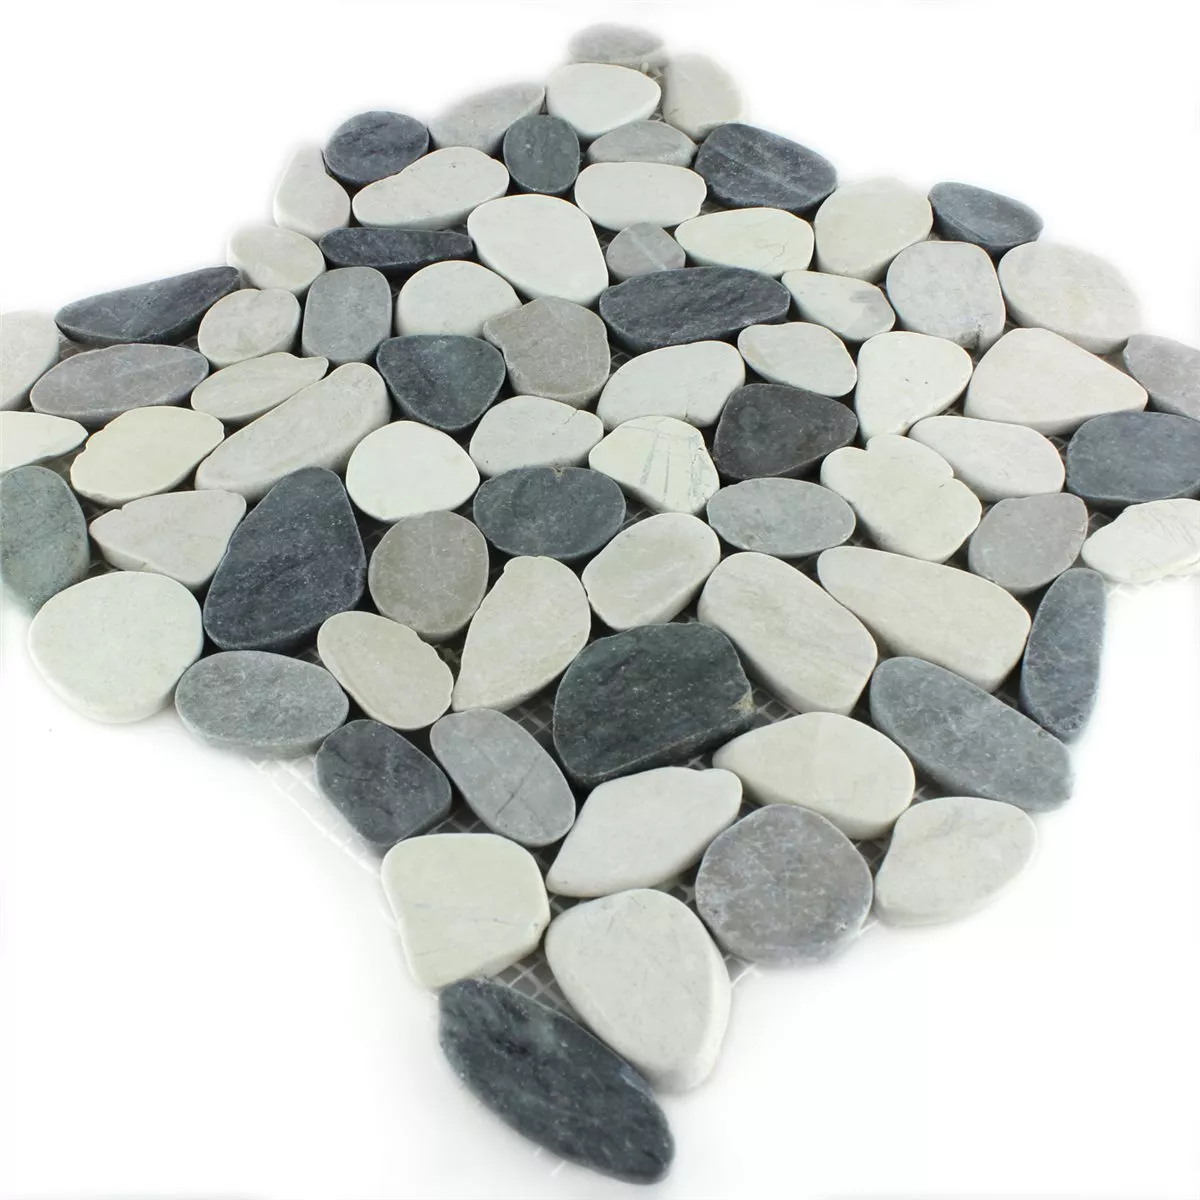 Sample Mosaic Tiles River Pebbles Serrated Creme Anthracite